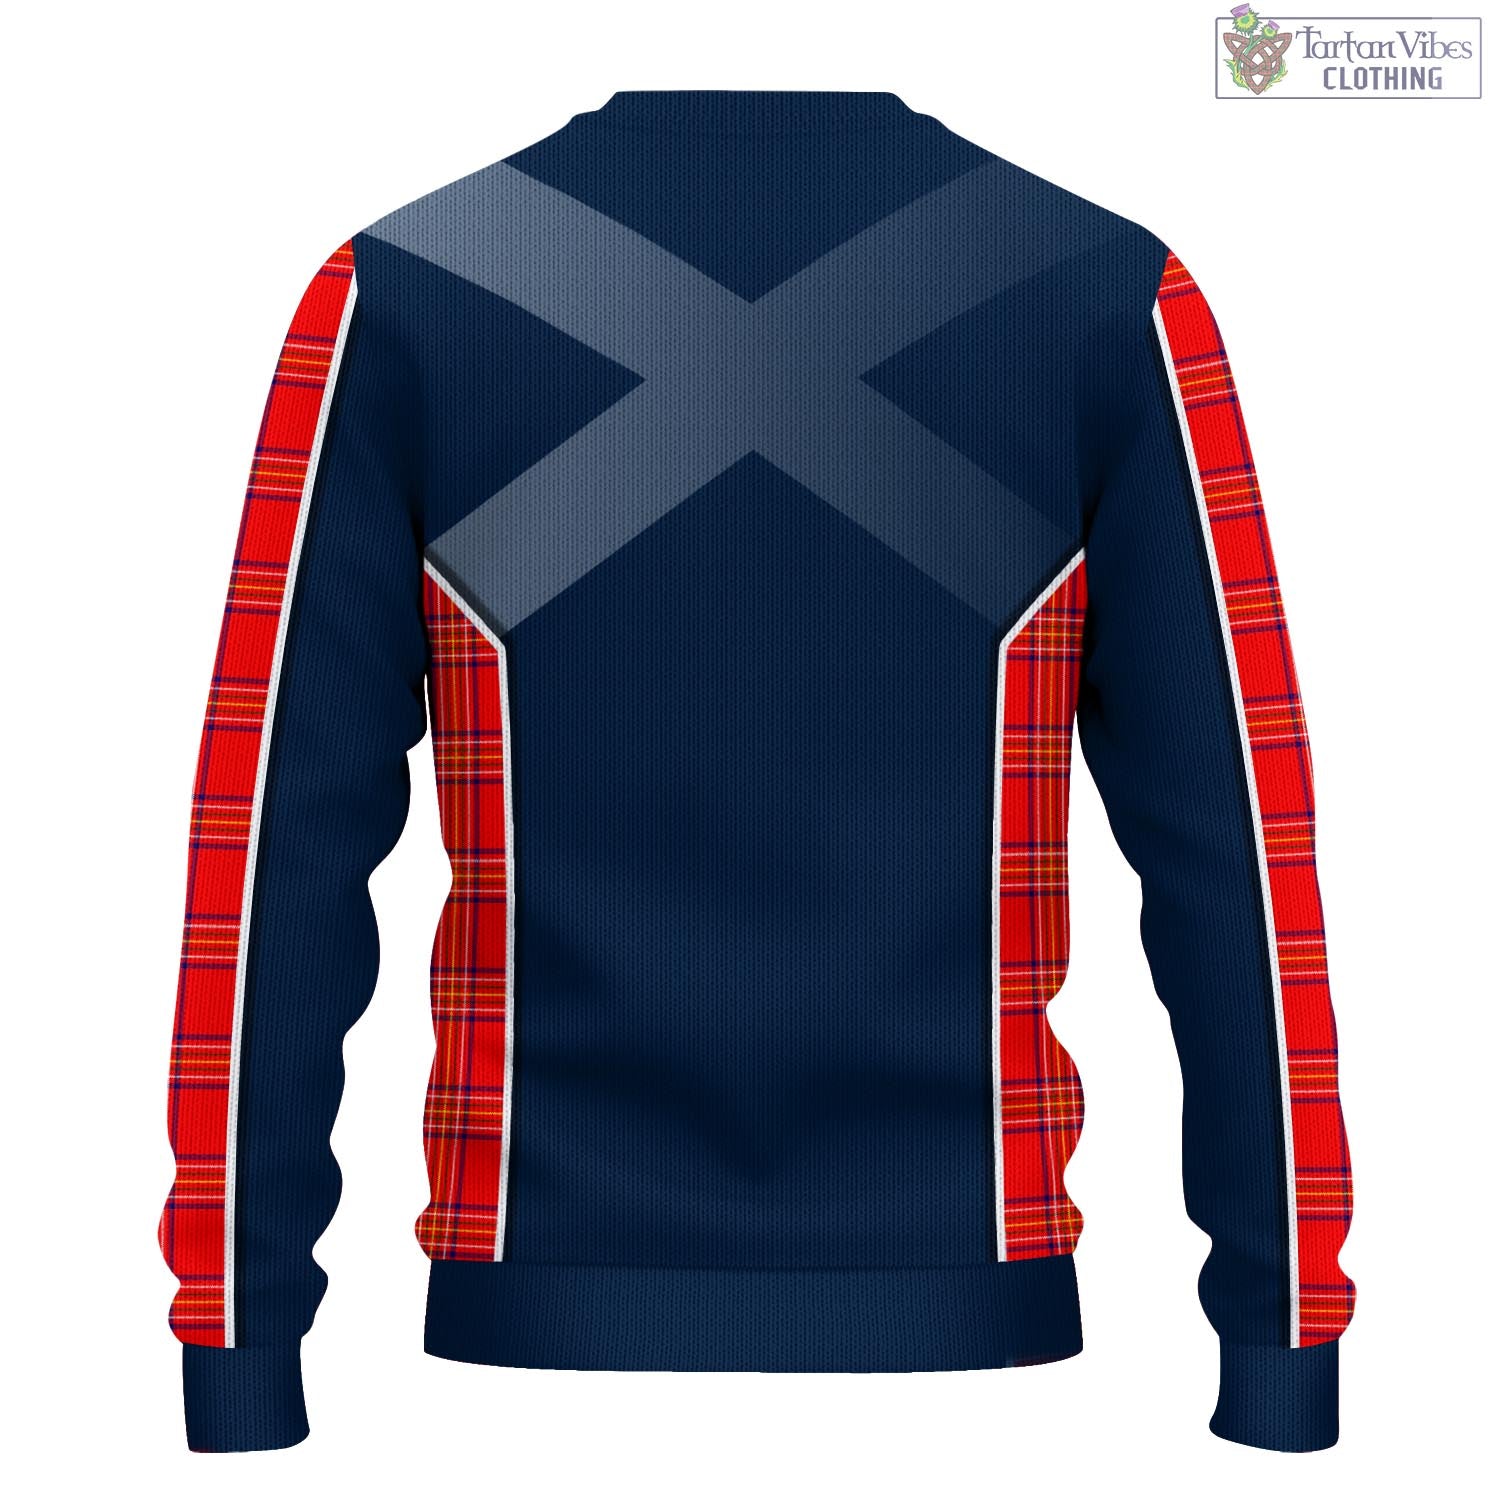 Tartan Vibes Clothing Burnett Modern Tartan Knitted Sweatshirt with Family Crest and Scottish Thistle Vibes Sport Style